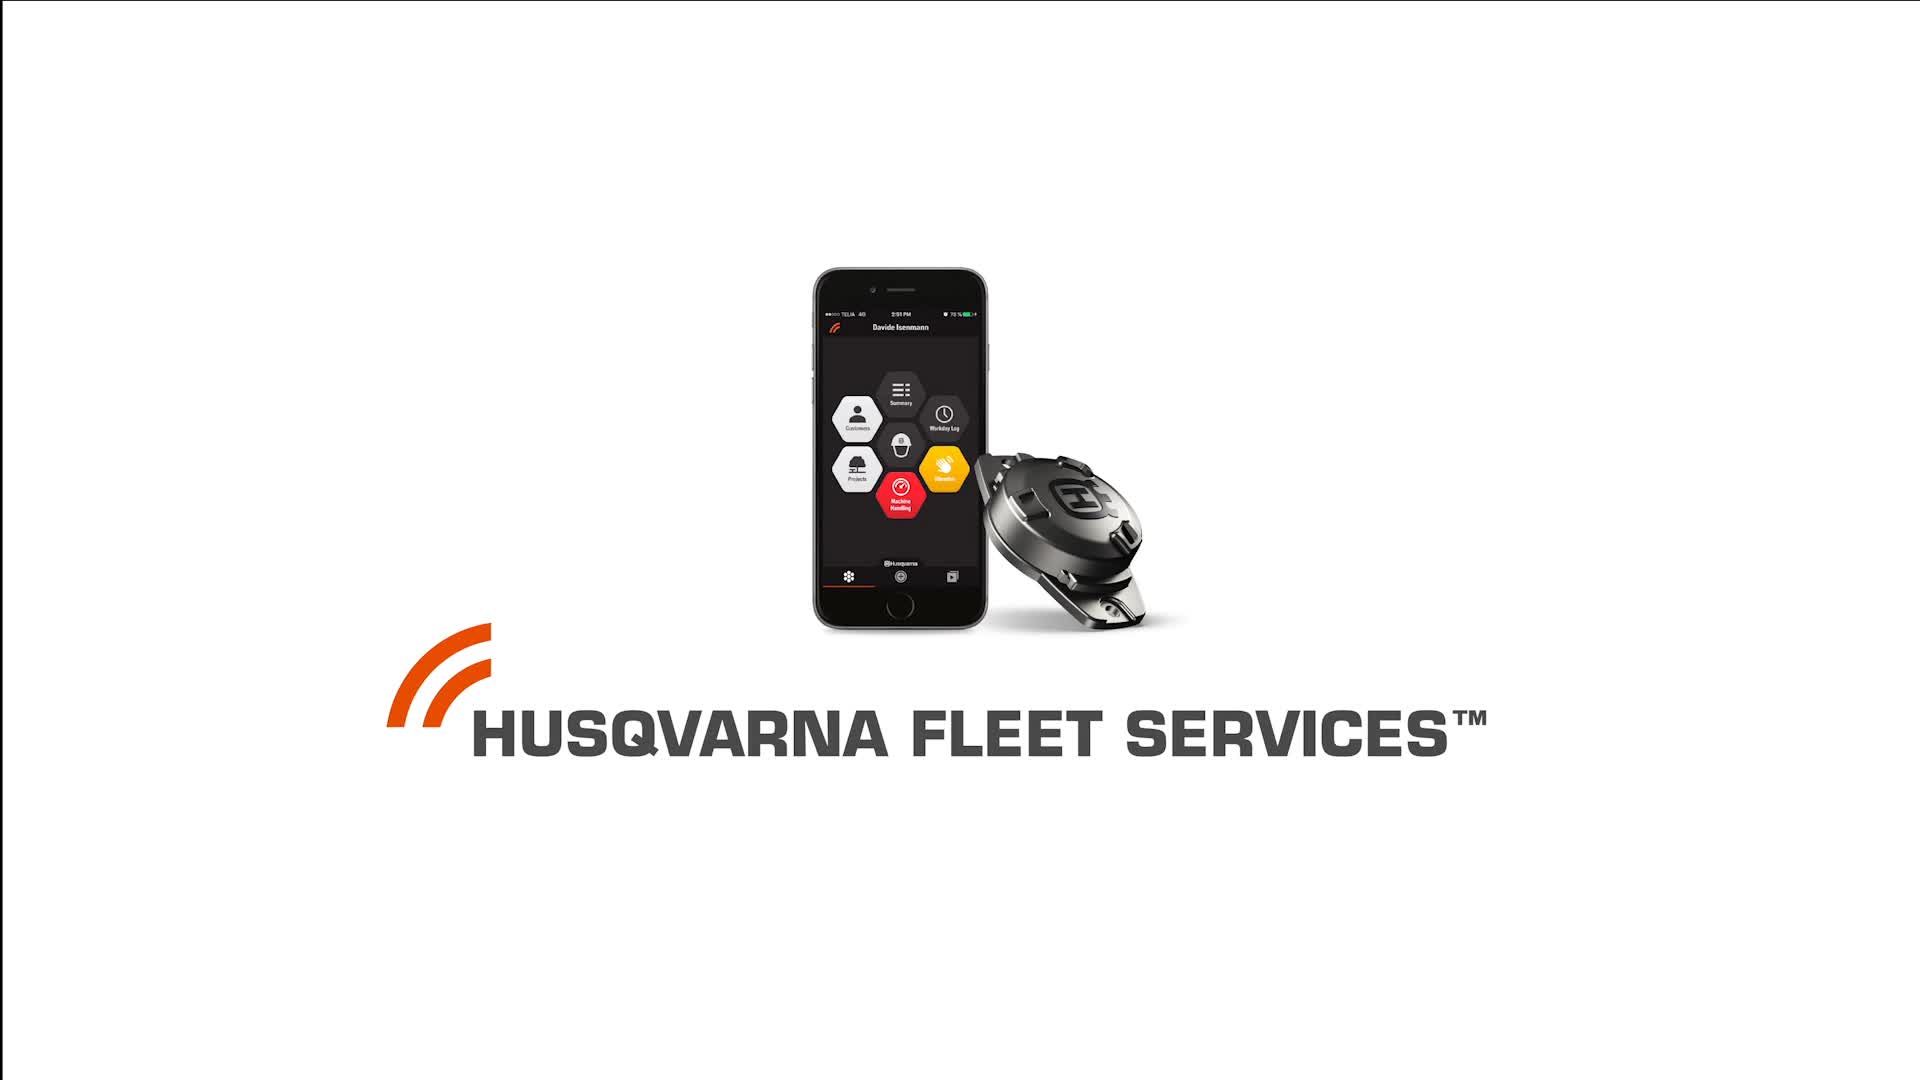 2016/2017 Concept  Husqvarna Fleet Services 1m30s 16:9 MASTER